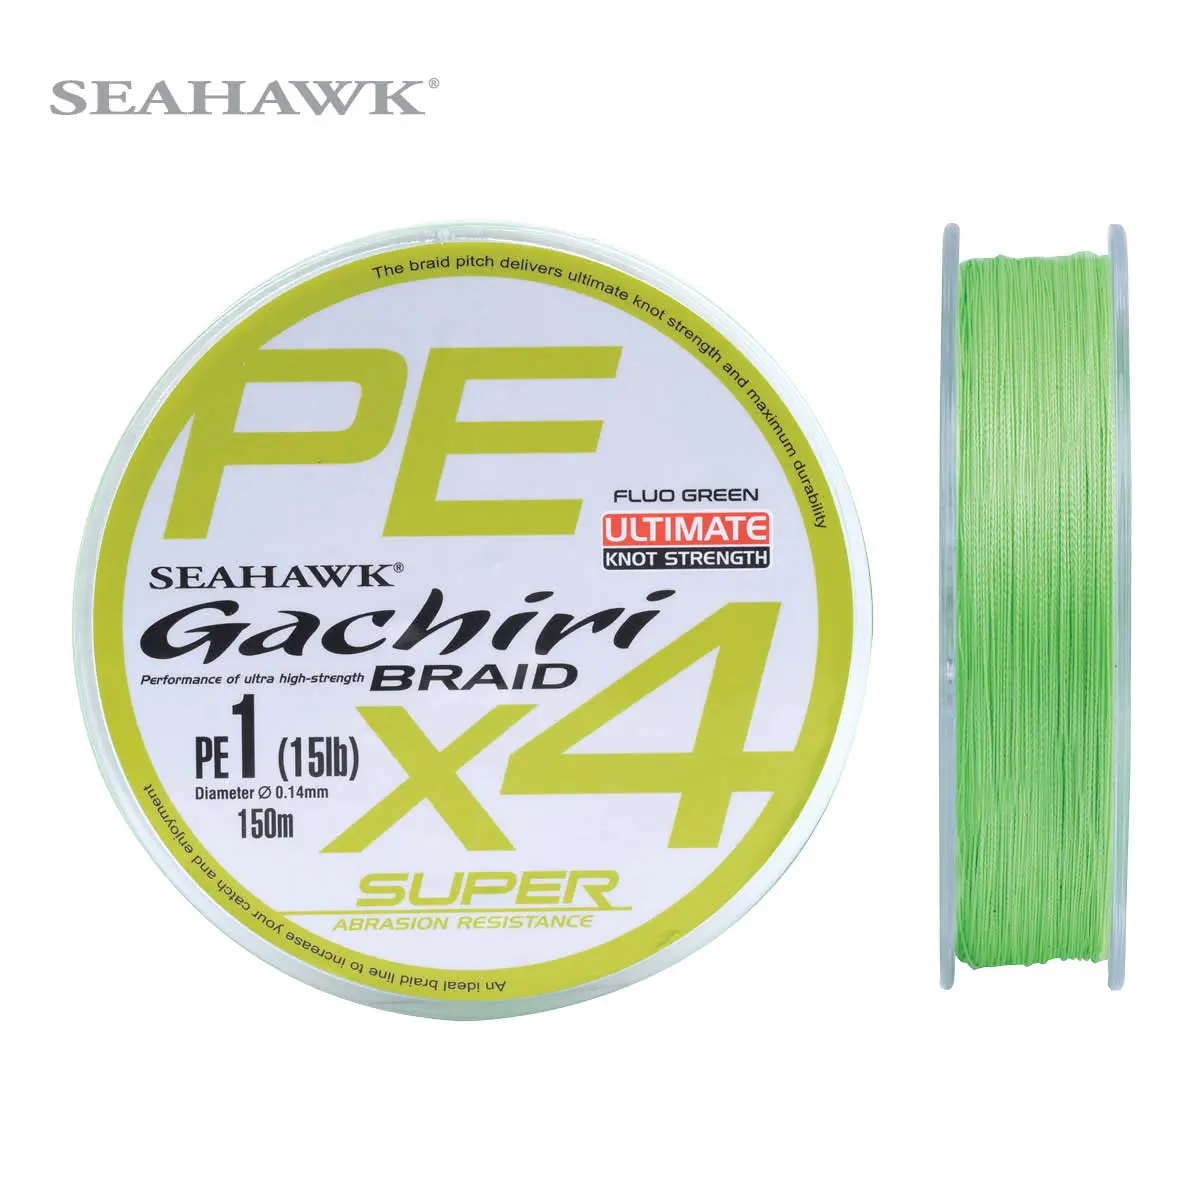 Seahawk Gachiri 4X Braided Line - Color-Lock Technology